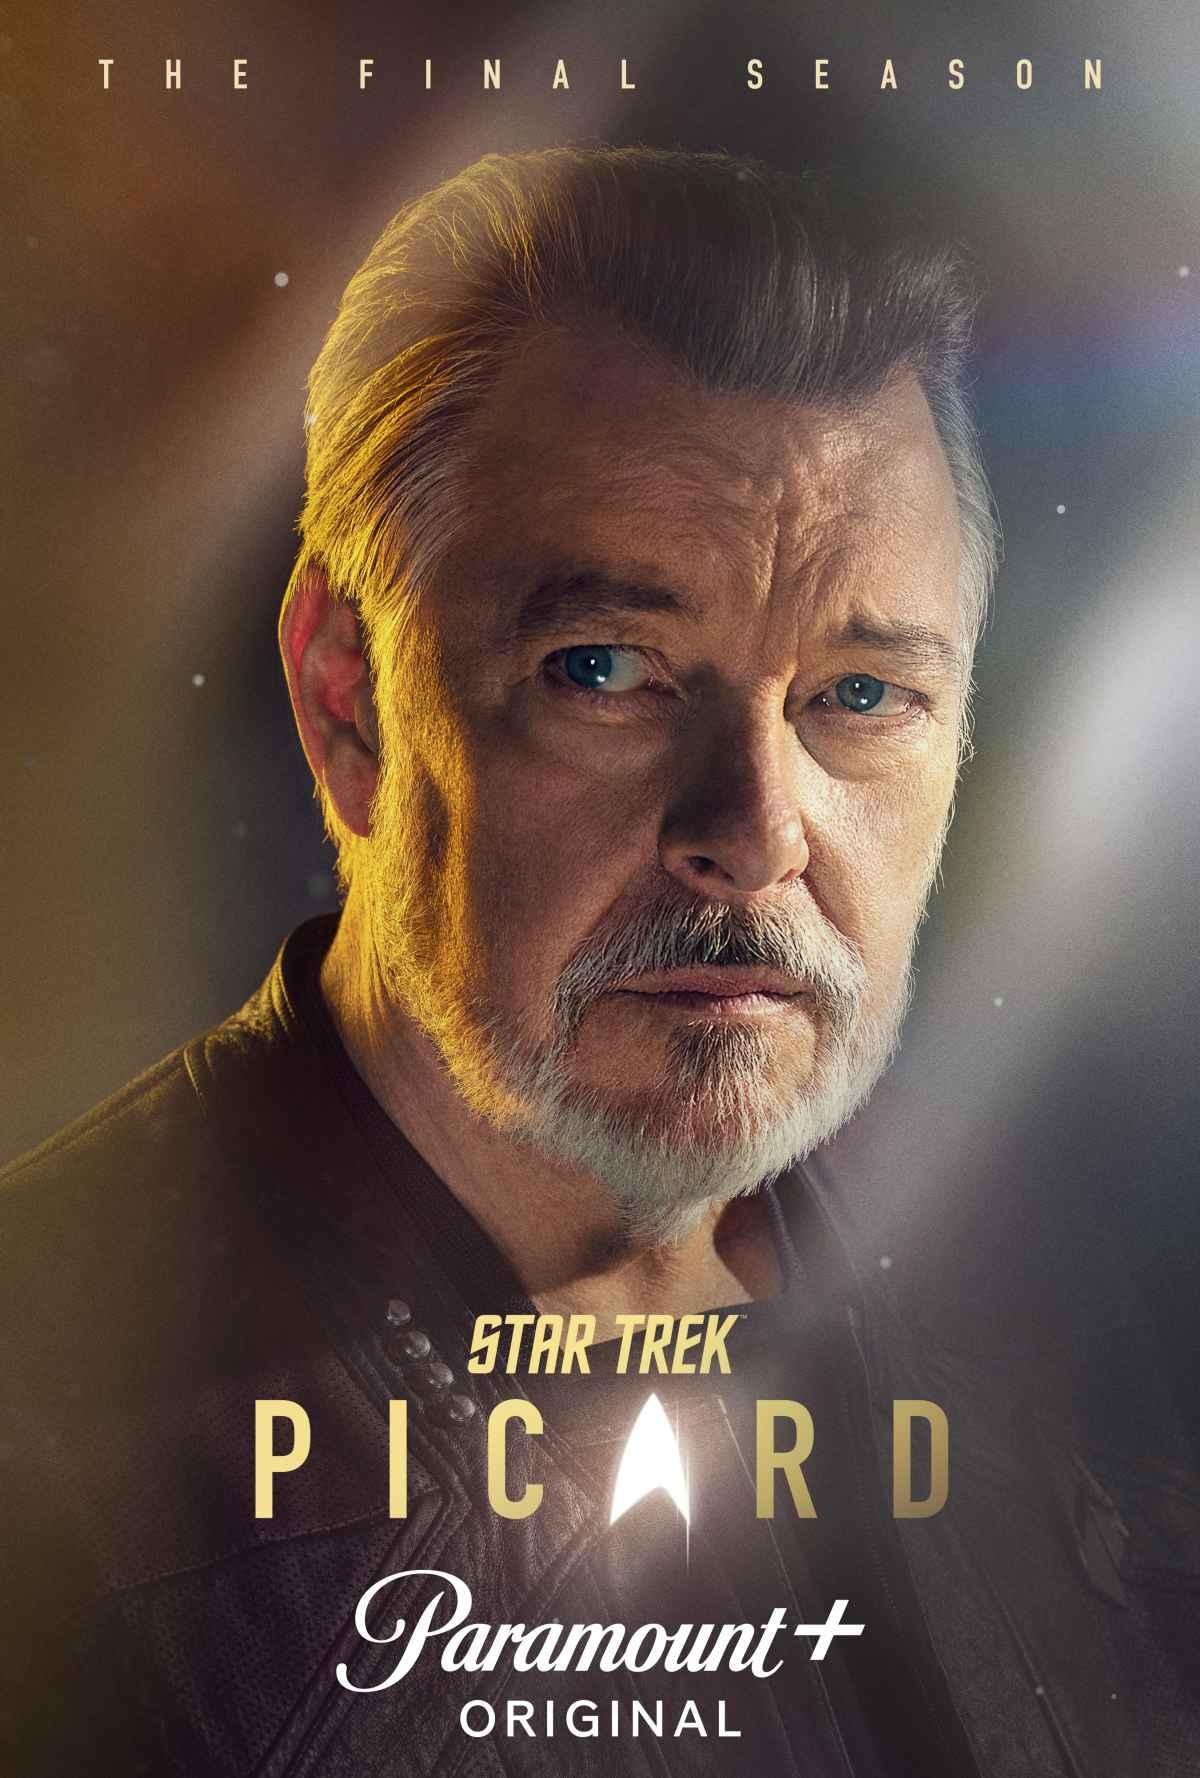 Star Trek: Picard Season 3 Teaser Reveals First Look at Returning Next